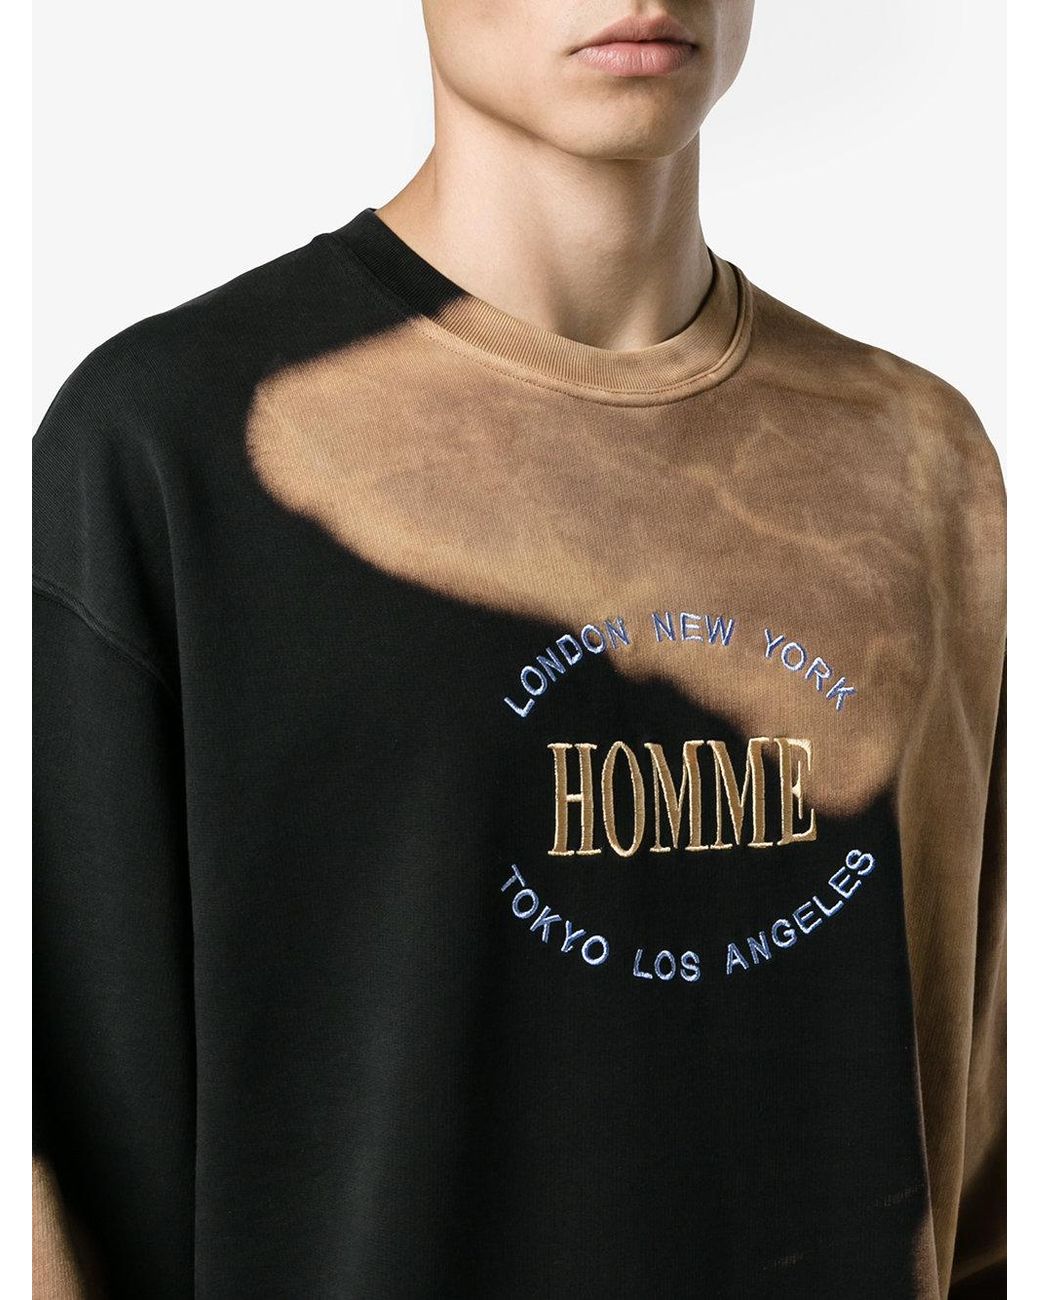 Balenciaga Homme City Cottonjersey Sweatshirt  ModeSens  Sweatshirts  Mens fashion streetwear Long sleeve tshirt men